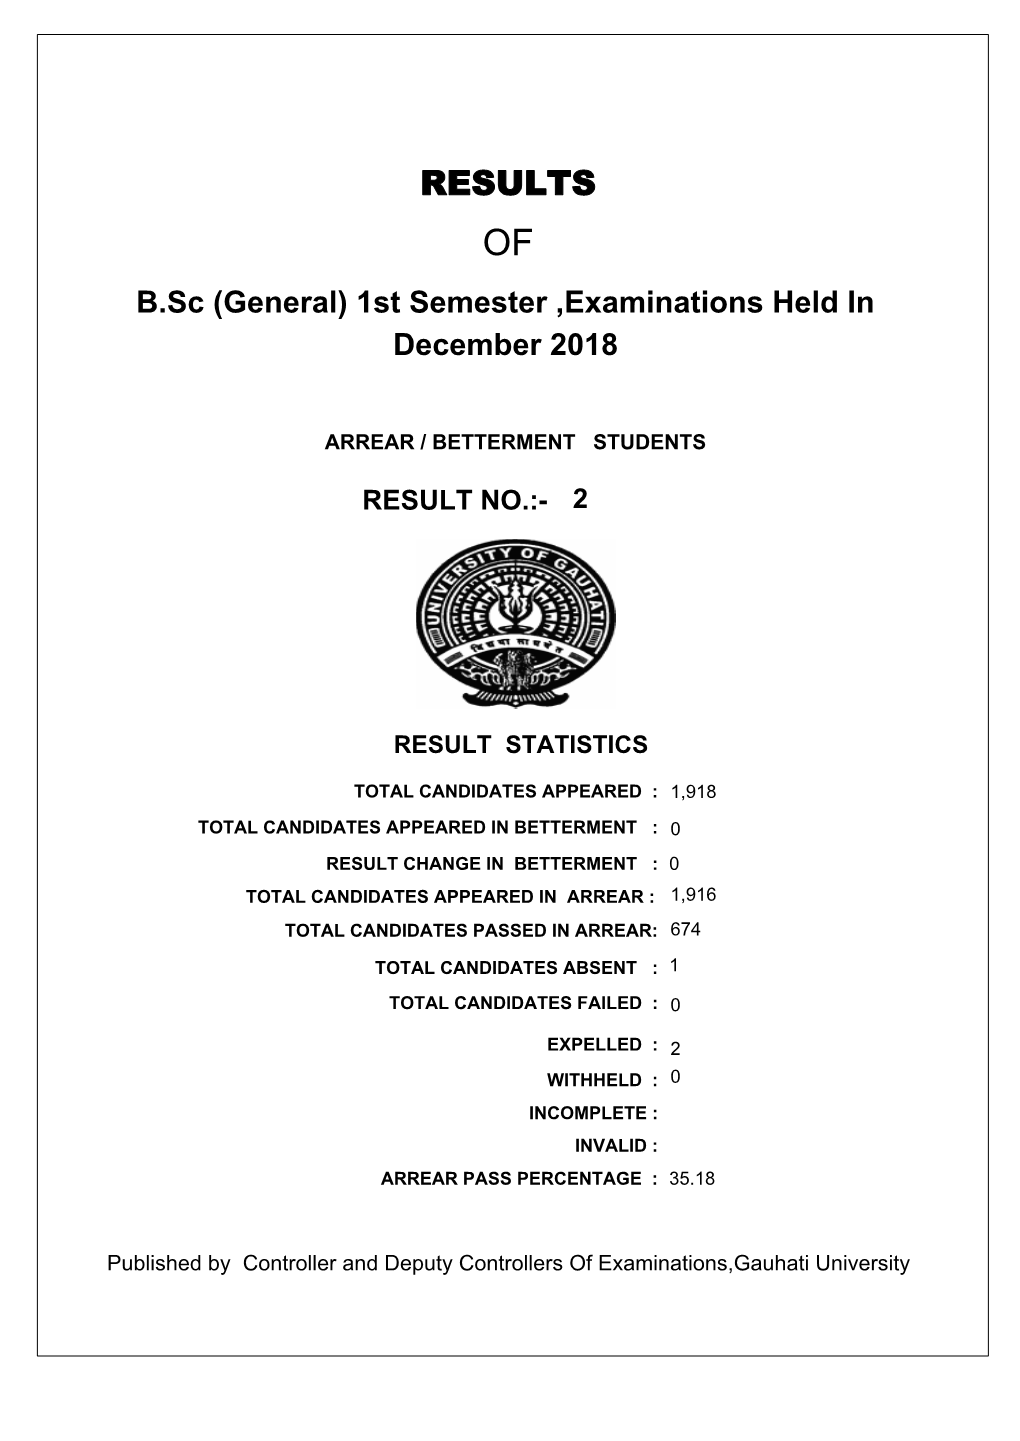 RESULTS of B.Sc (General) 1St Semester ,Examinations Held in December 2018